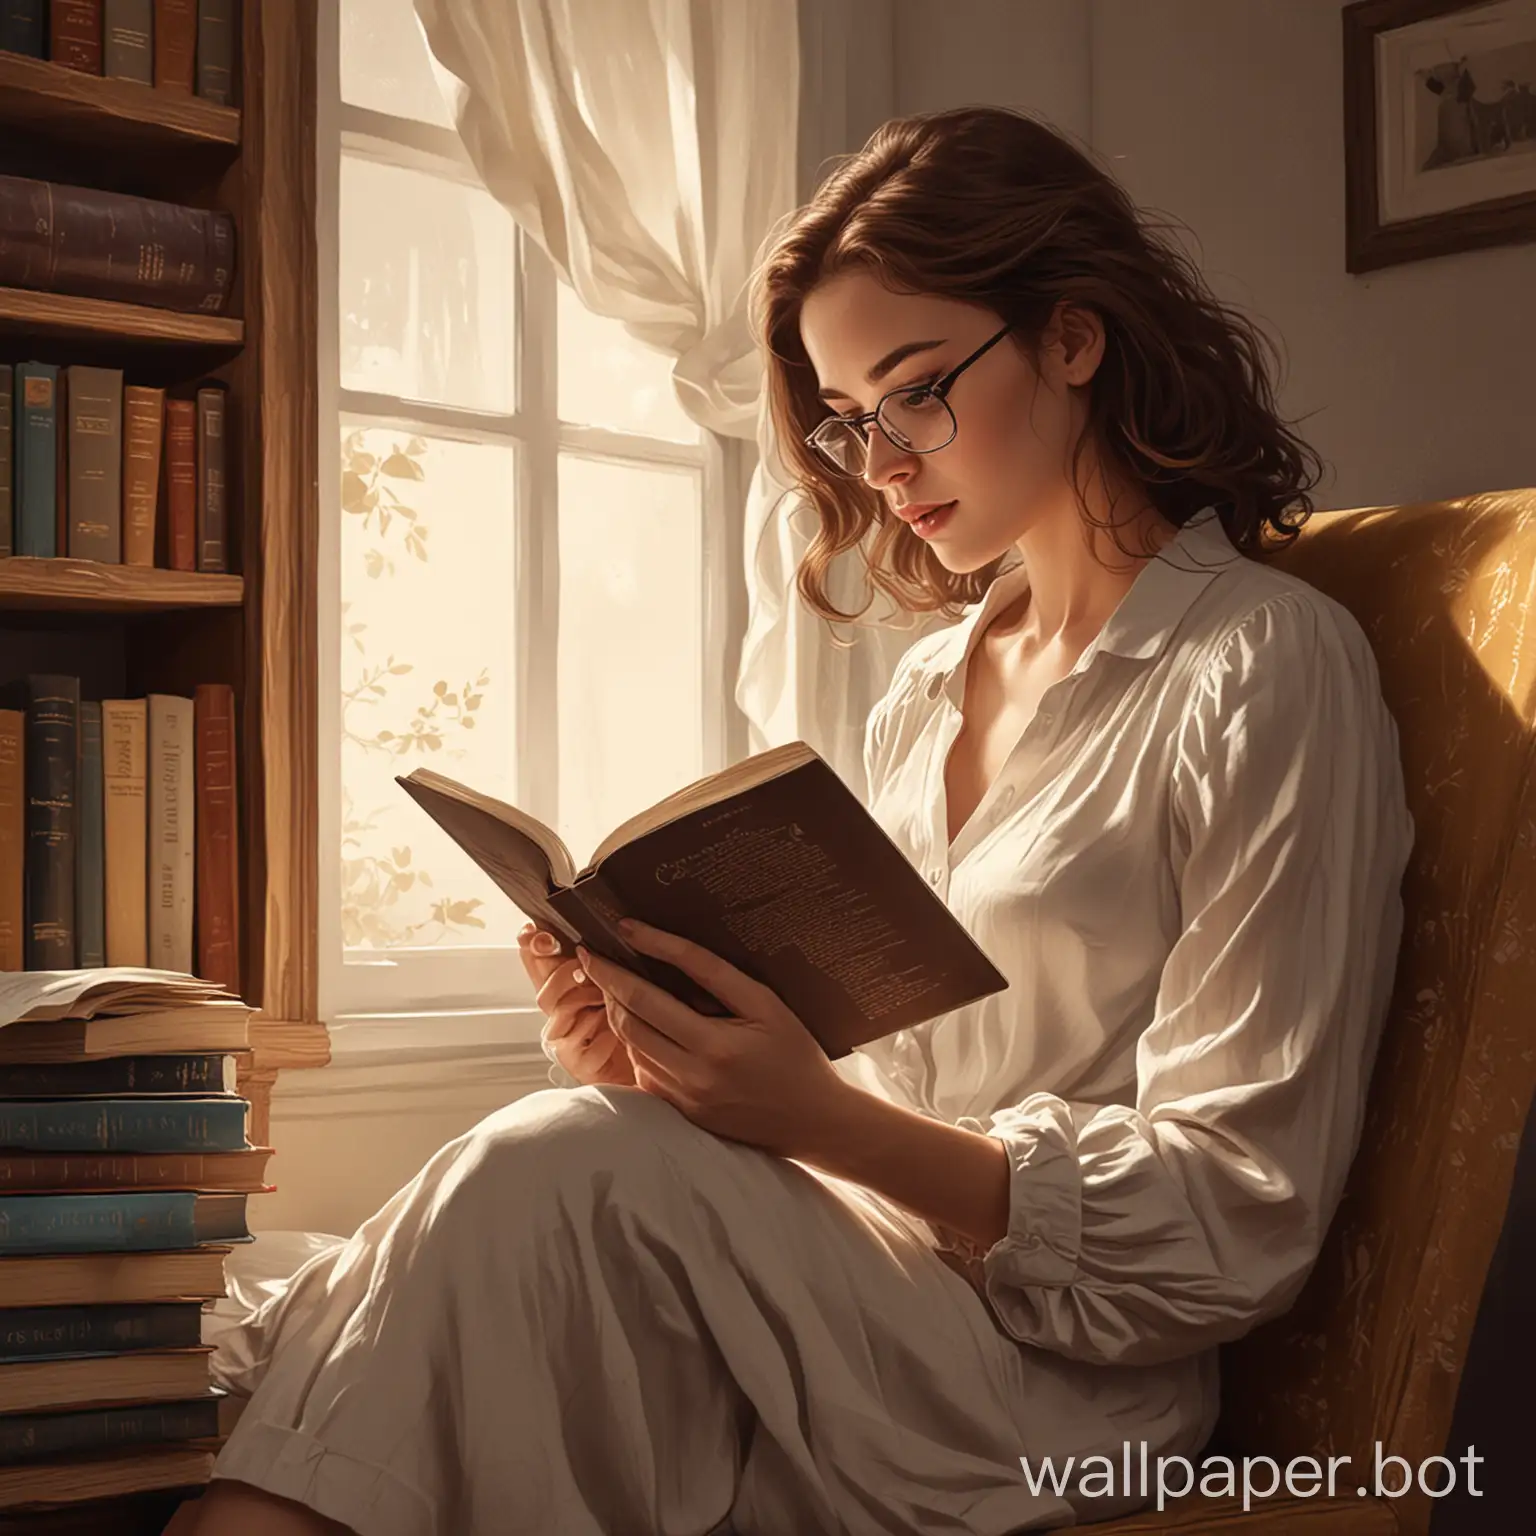 Woman-Engrossed-in-Reading-Book-in-Digital-Illustration